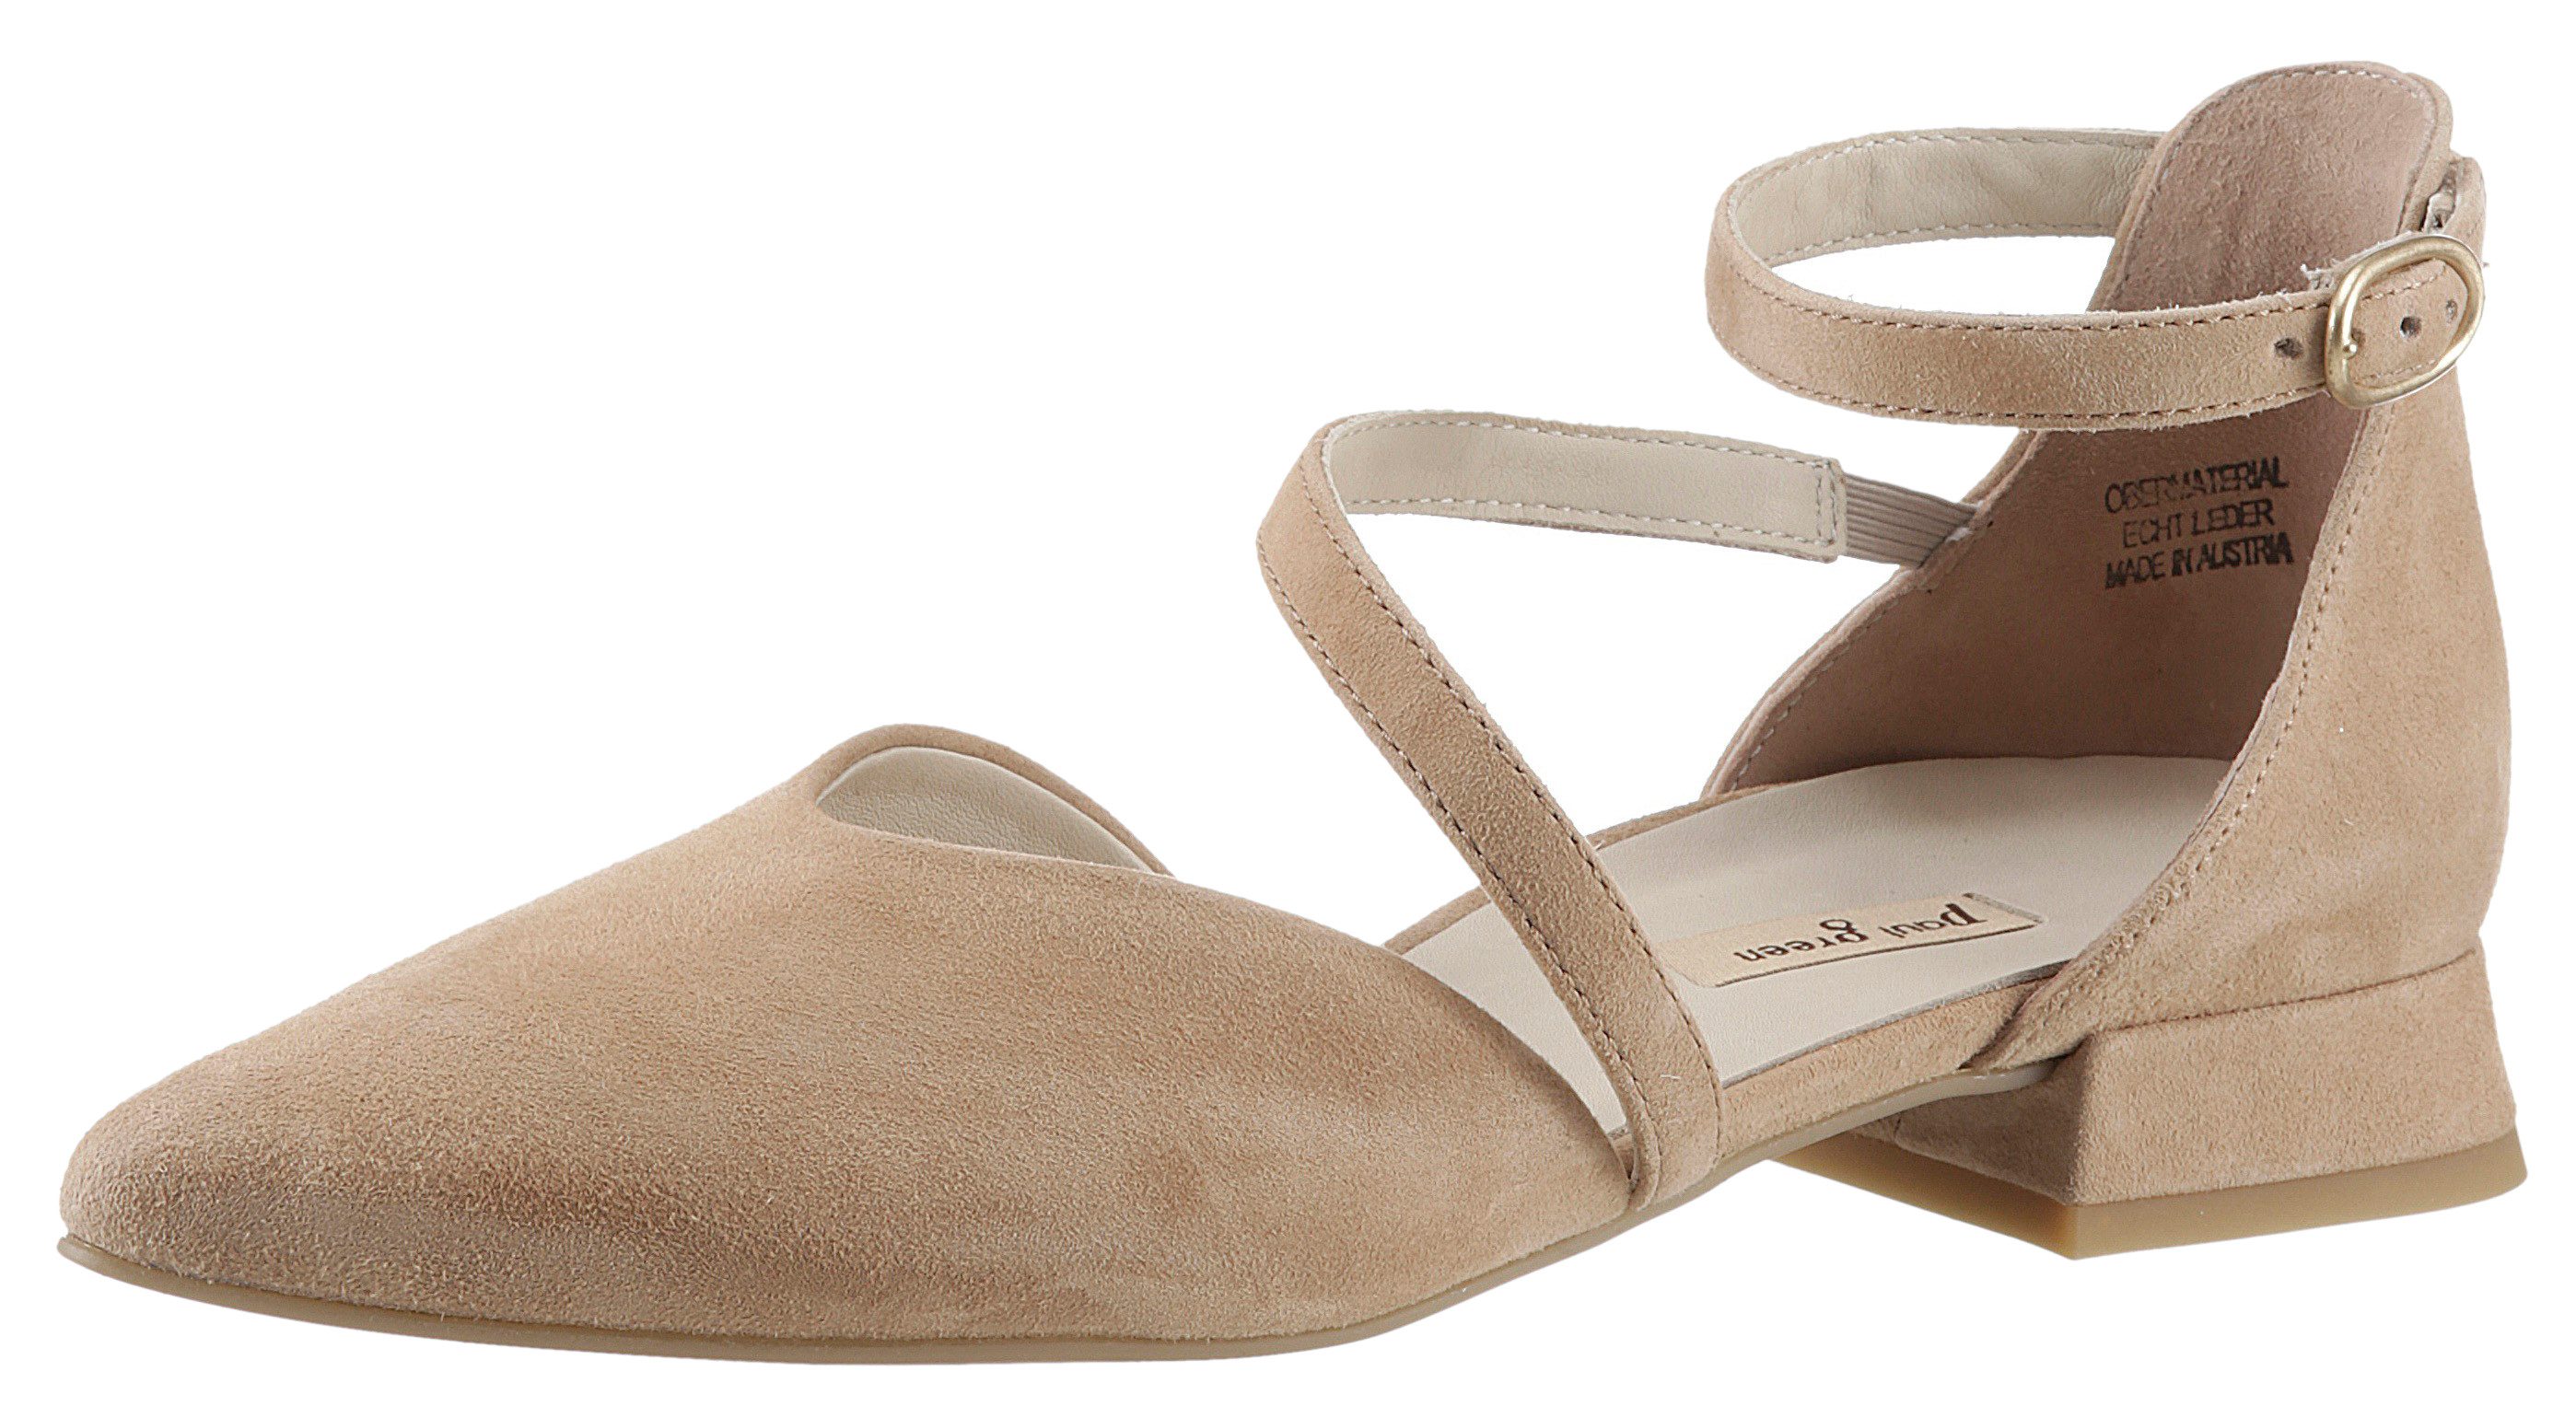 Paul Green Ballerina Flats, Kitten Heel, Festliche Schuhe mit verstellbarem Fesselriemchen